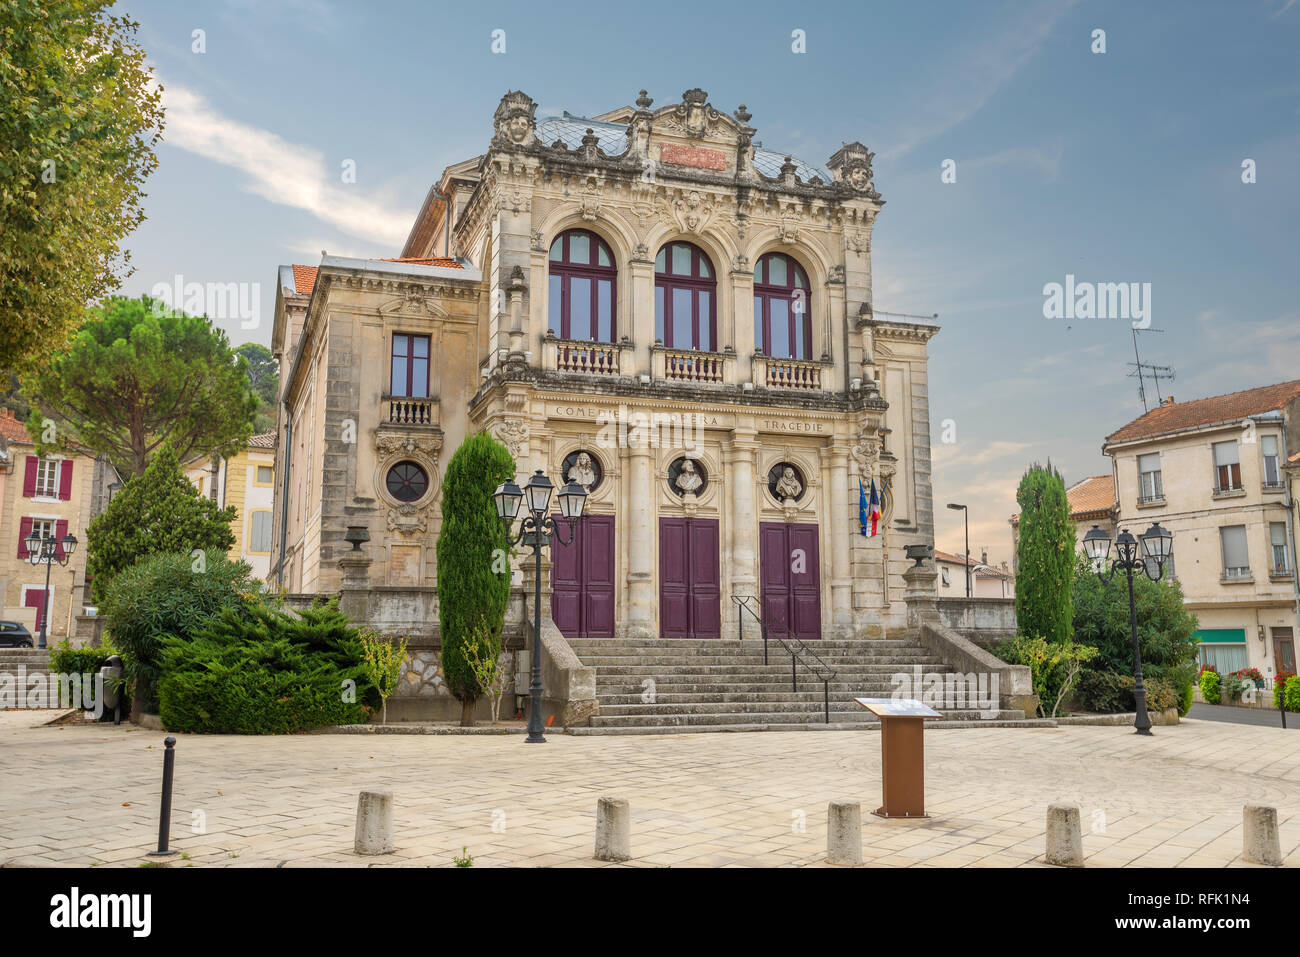 Historic monument. Municipal Theatre at Orange. France, Vaucluse, South France Stock Photo